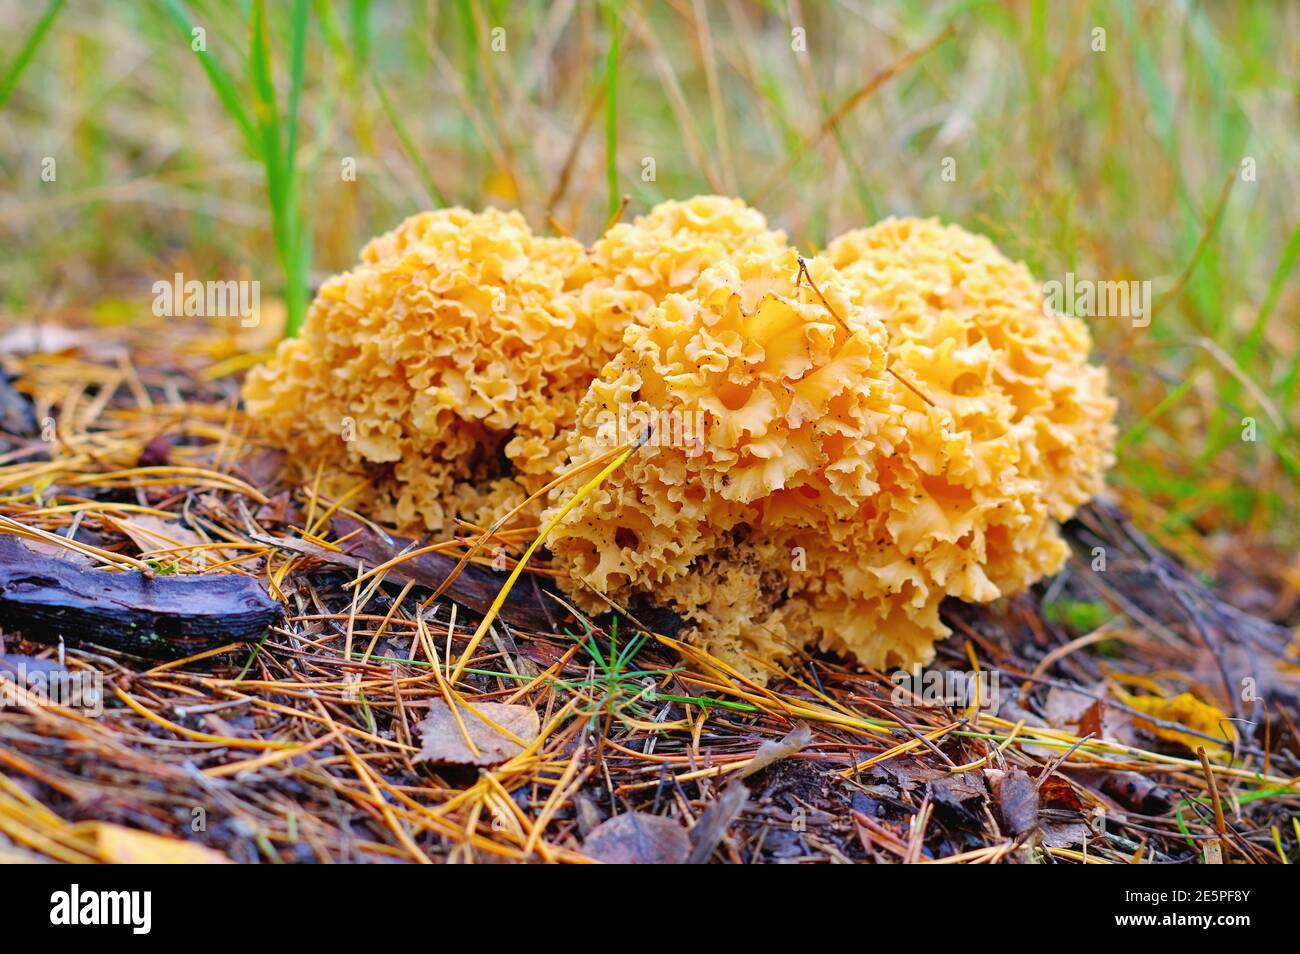 a brown Cauliflower Fungus mushroom in autumn forest Stock Photo